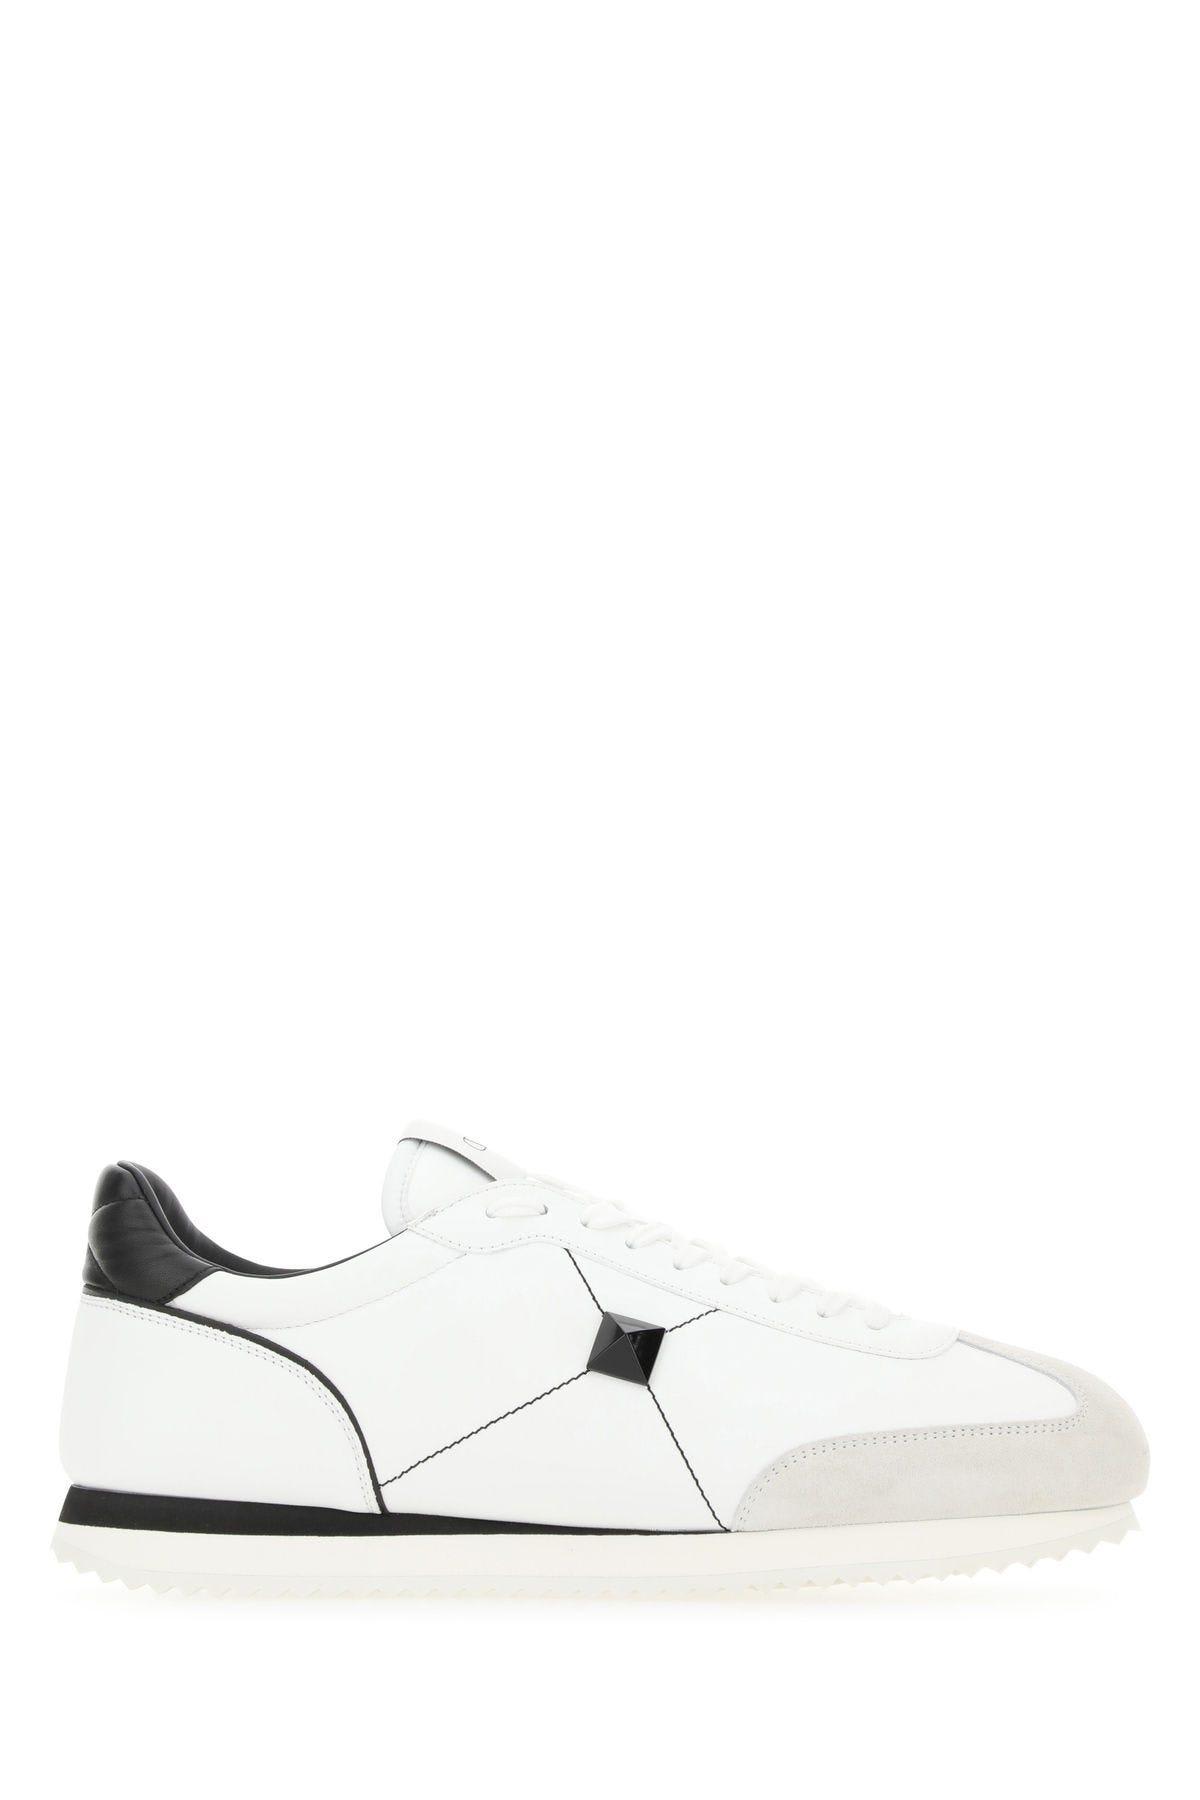 Valentino Garavani White Leather Stud Around Sneakers In Bianco/nero